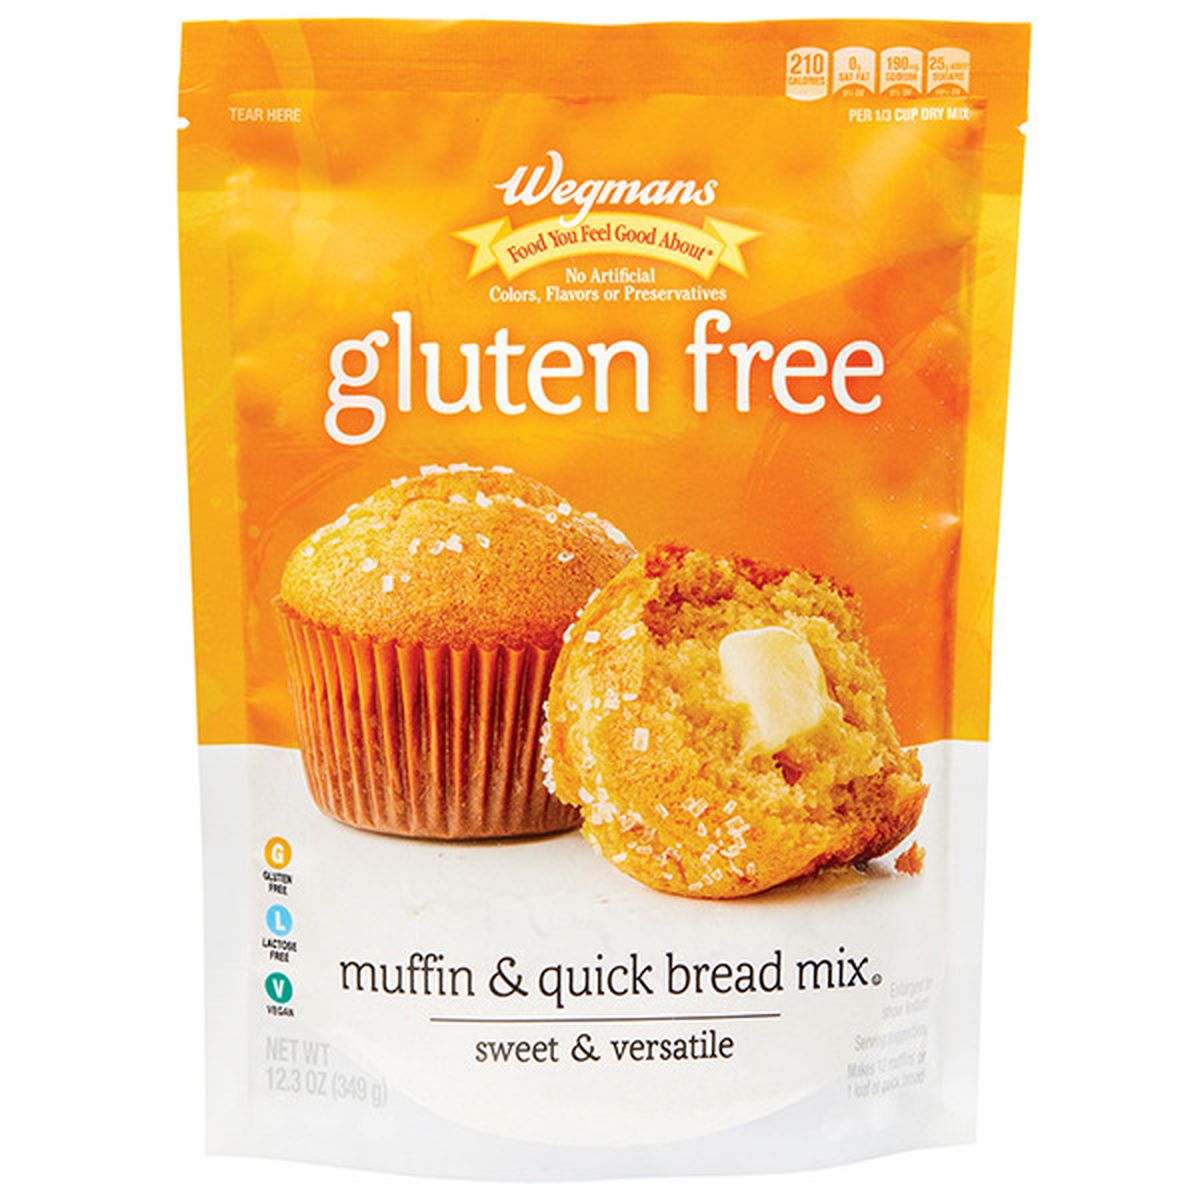 Calories in Wegmans Gluten Free Muffin & Quick Bread Mix